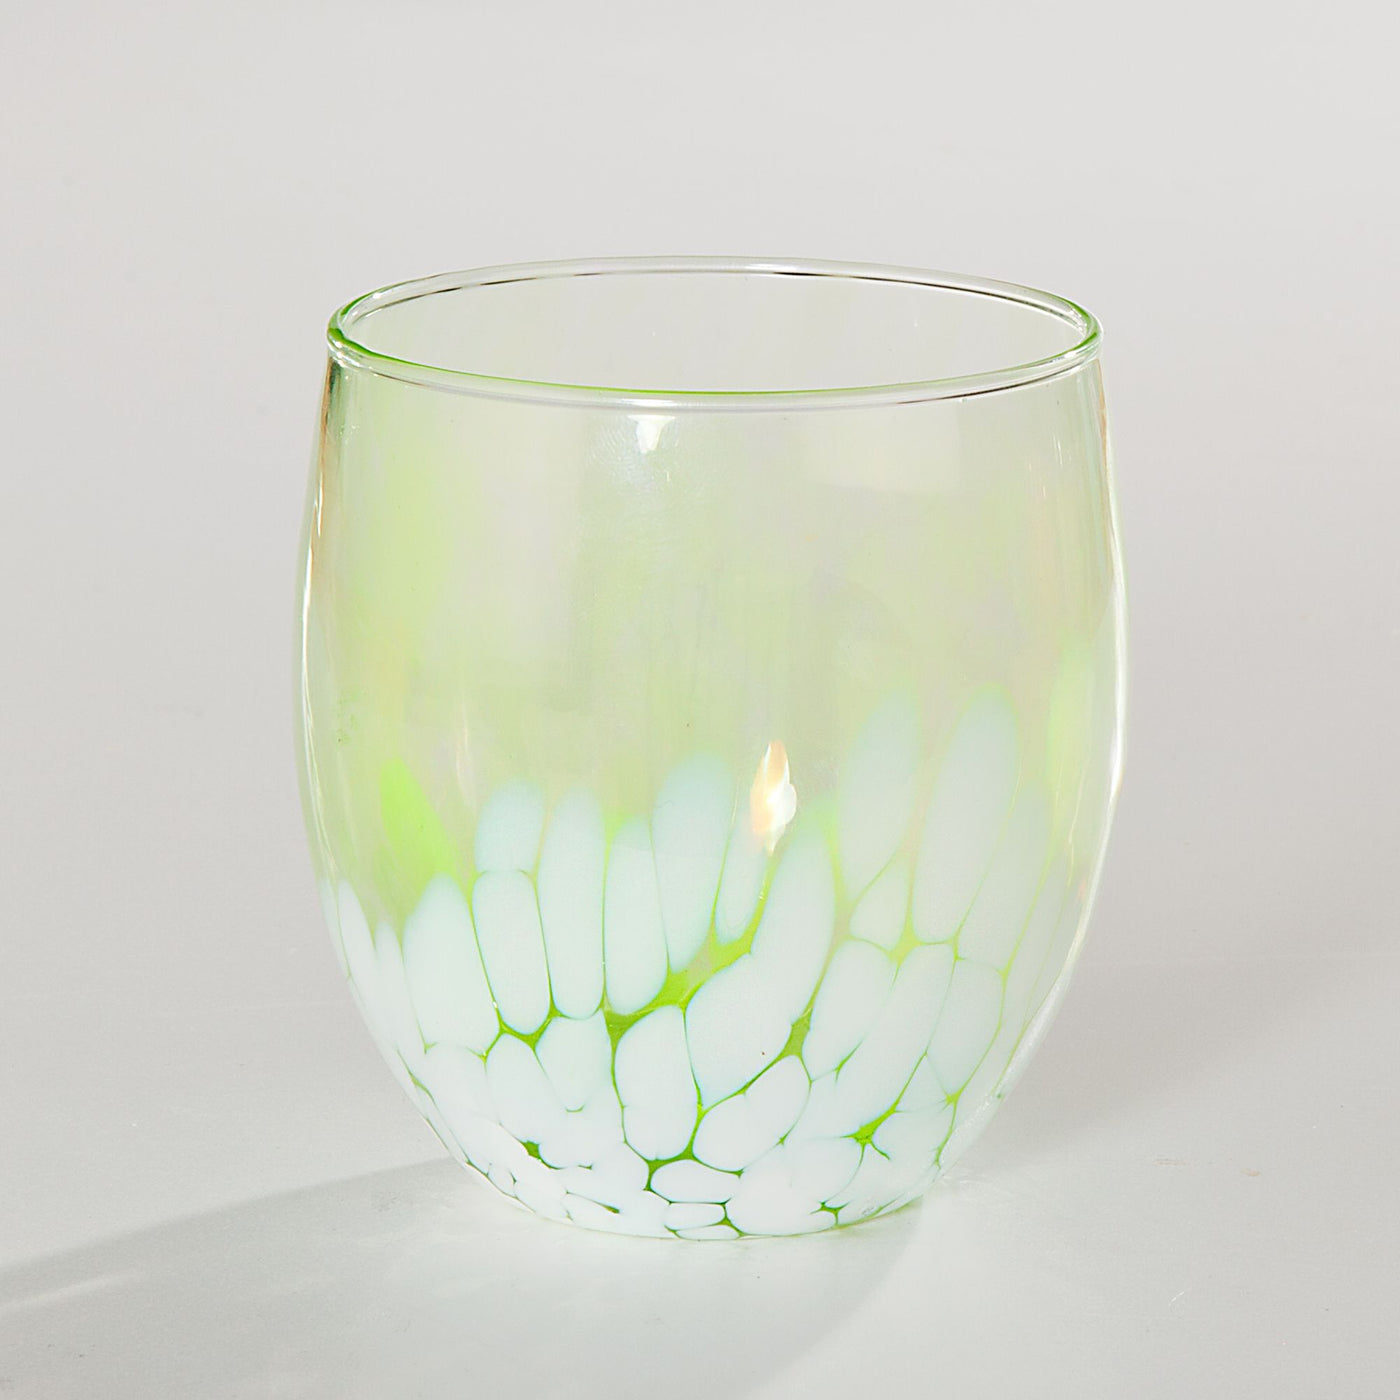 Murano-Style Neon Drinking Glasses Set of 6